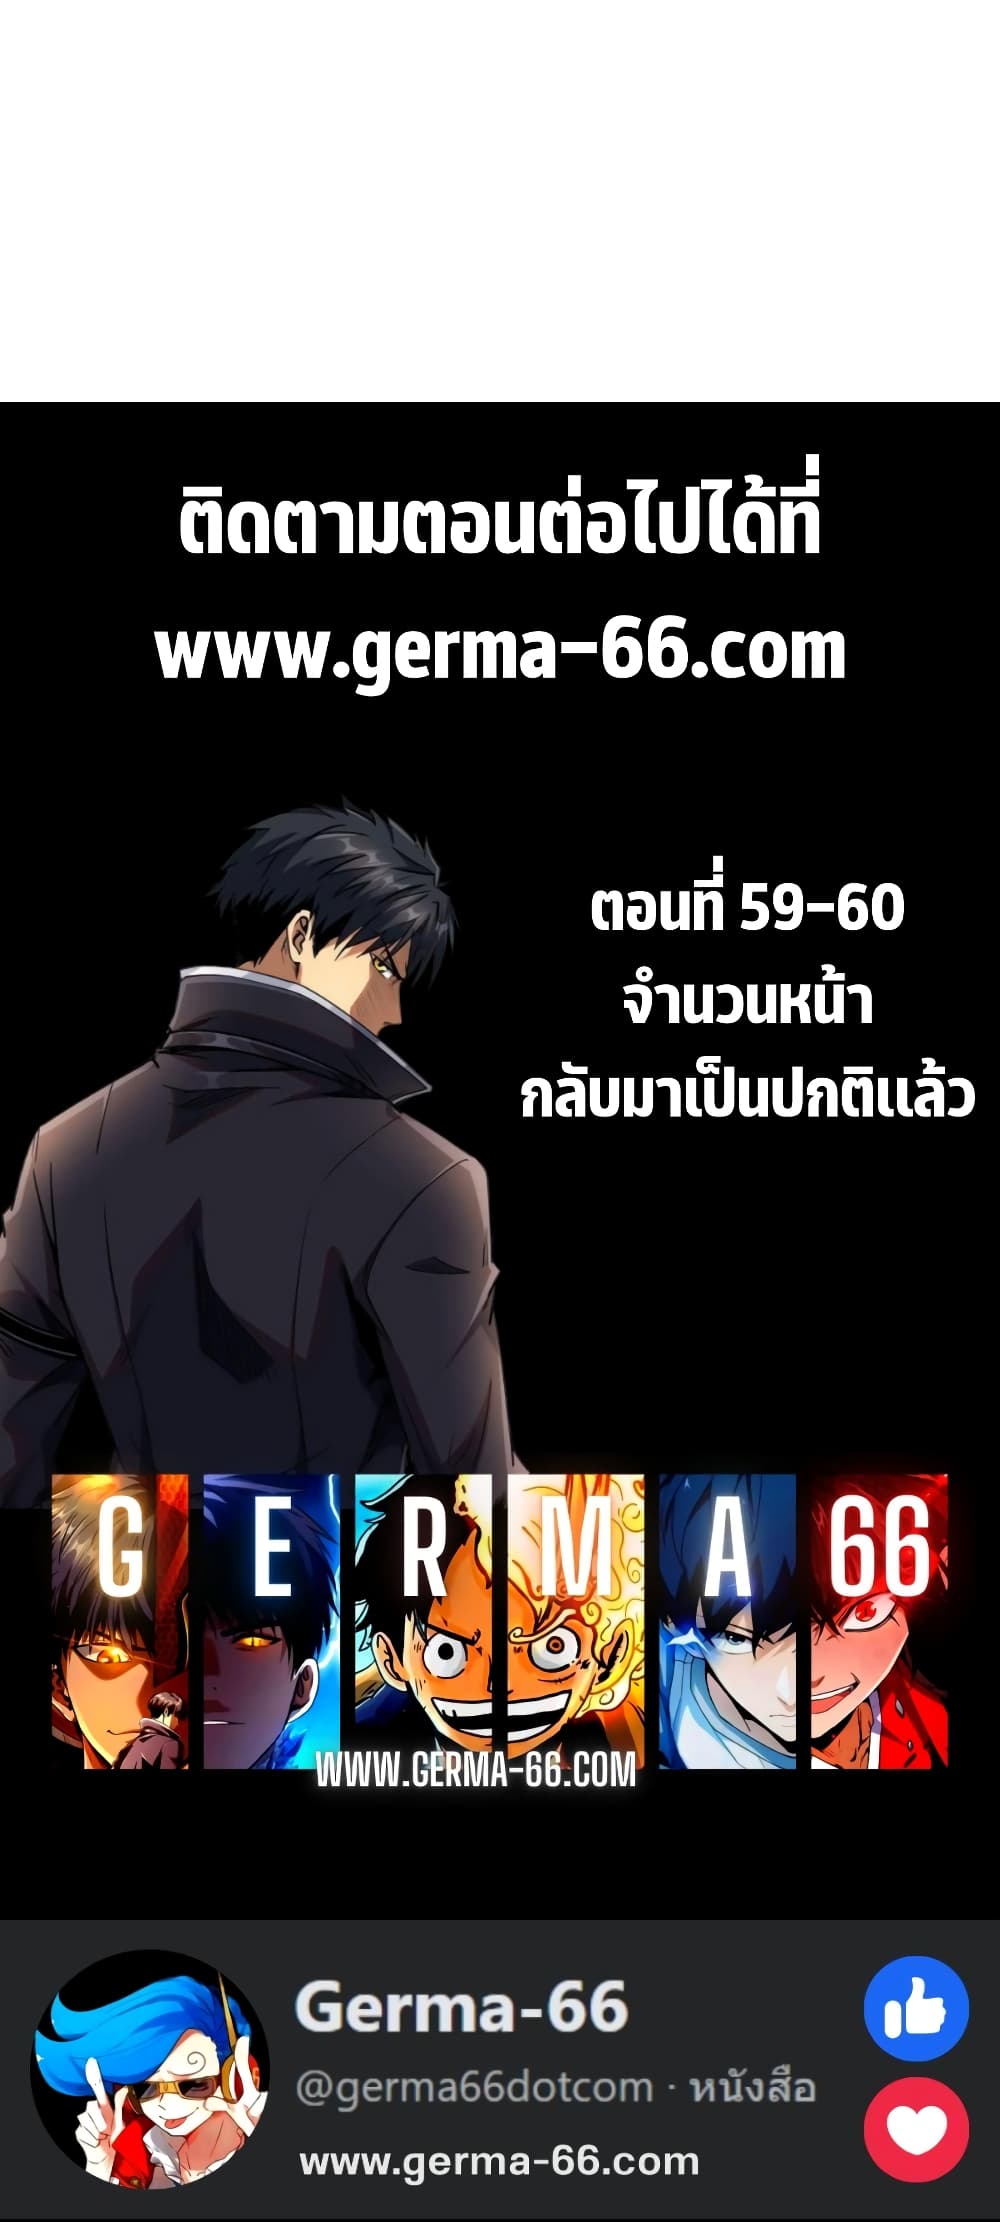 Super God Gene 57-57